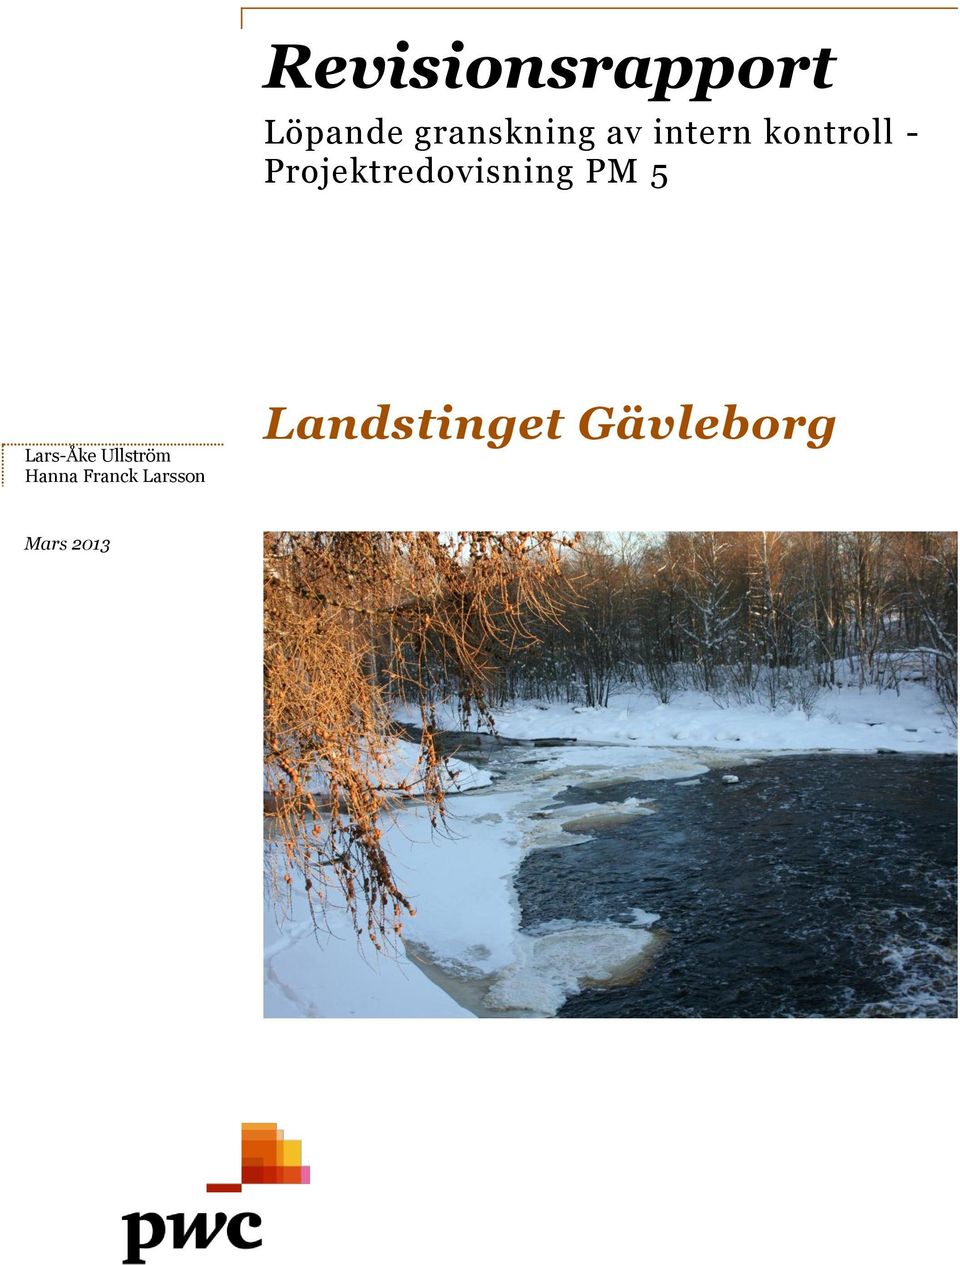 Projektredovisning PM 5 Lars-Åke